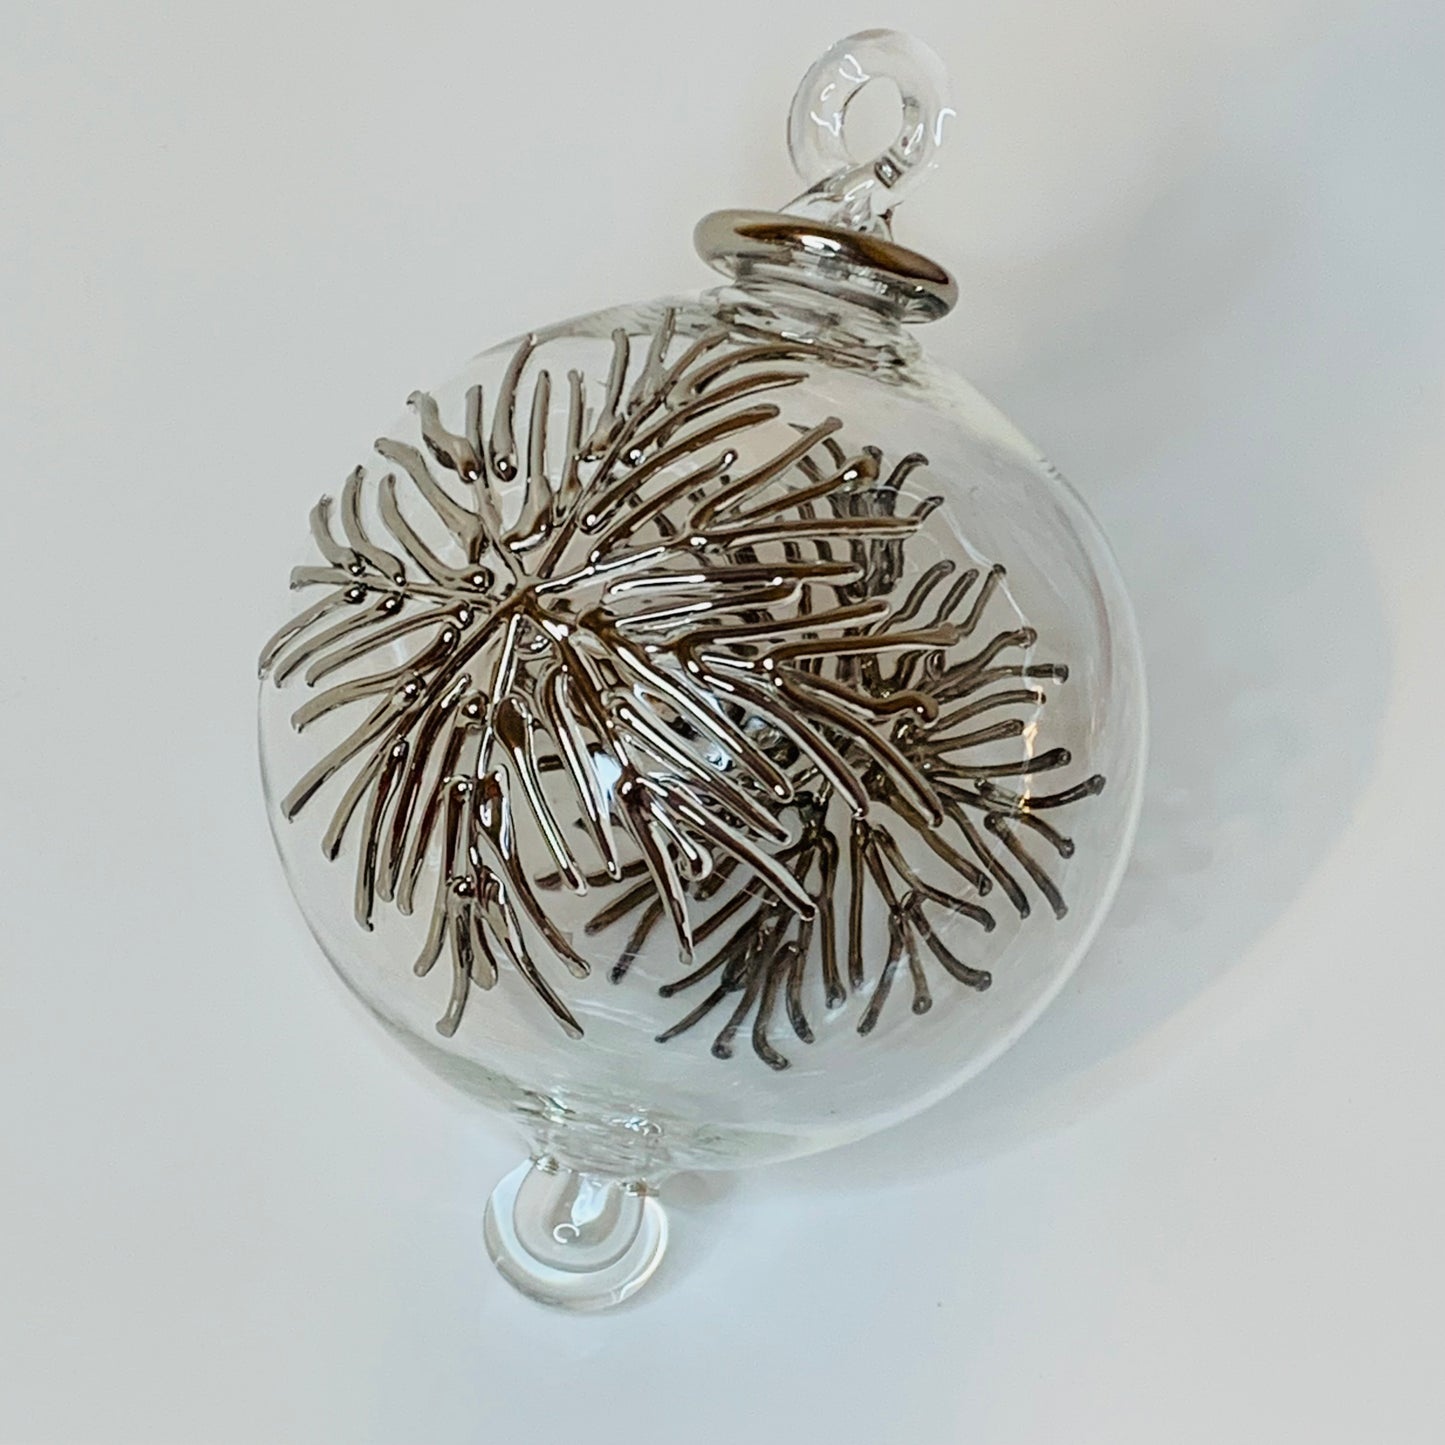 Blown Glass Ornament - Frozen Silver